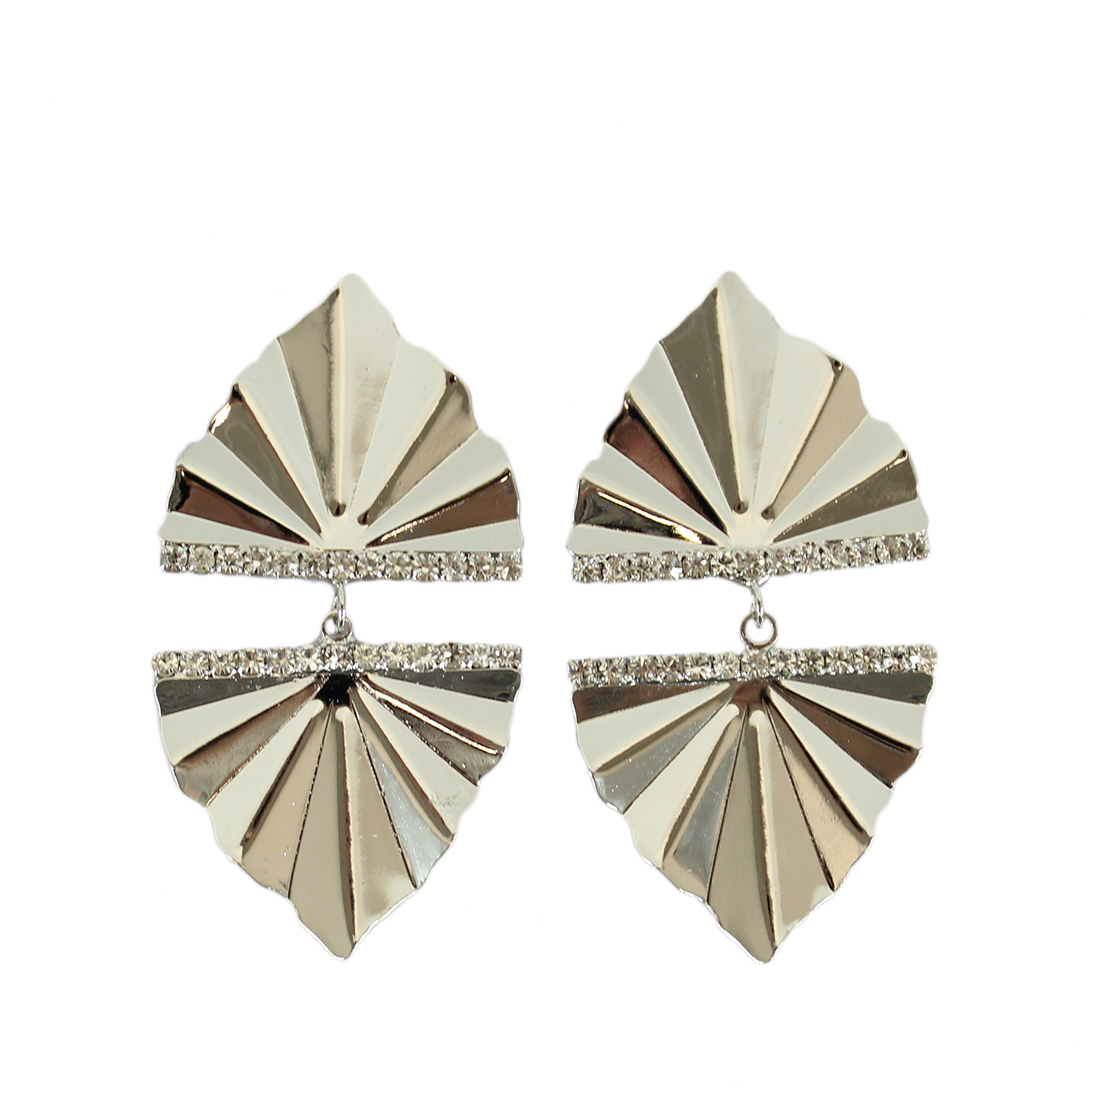 Napkin style earrings with thiny diamonds